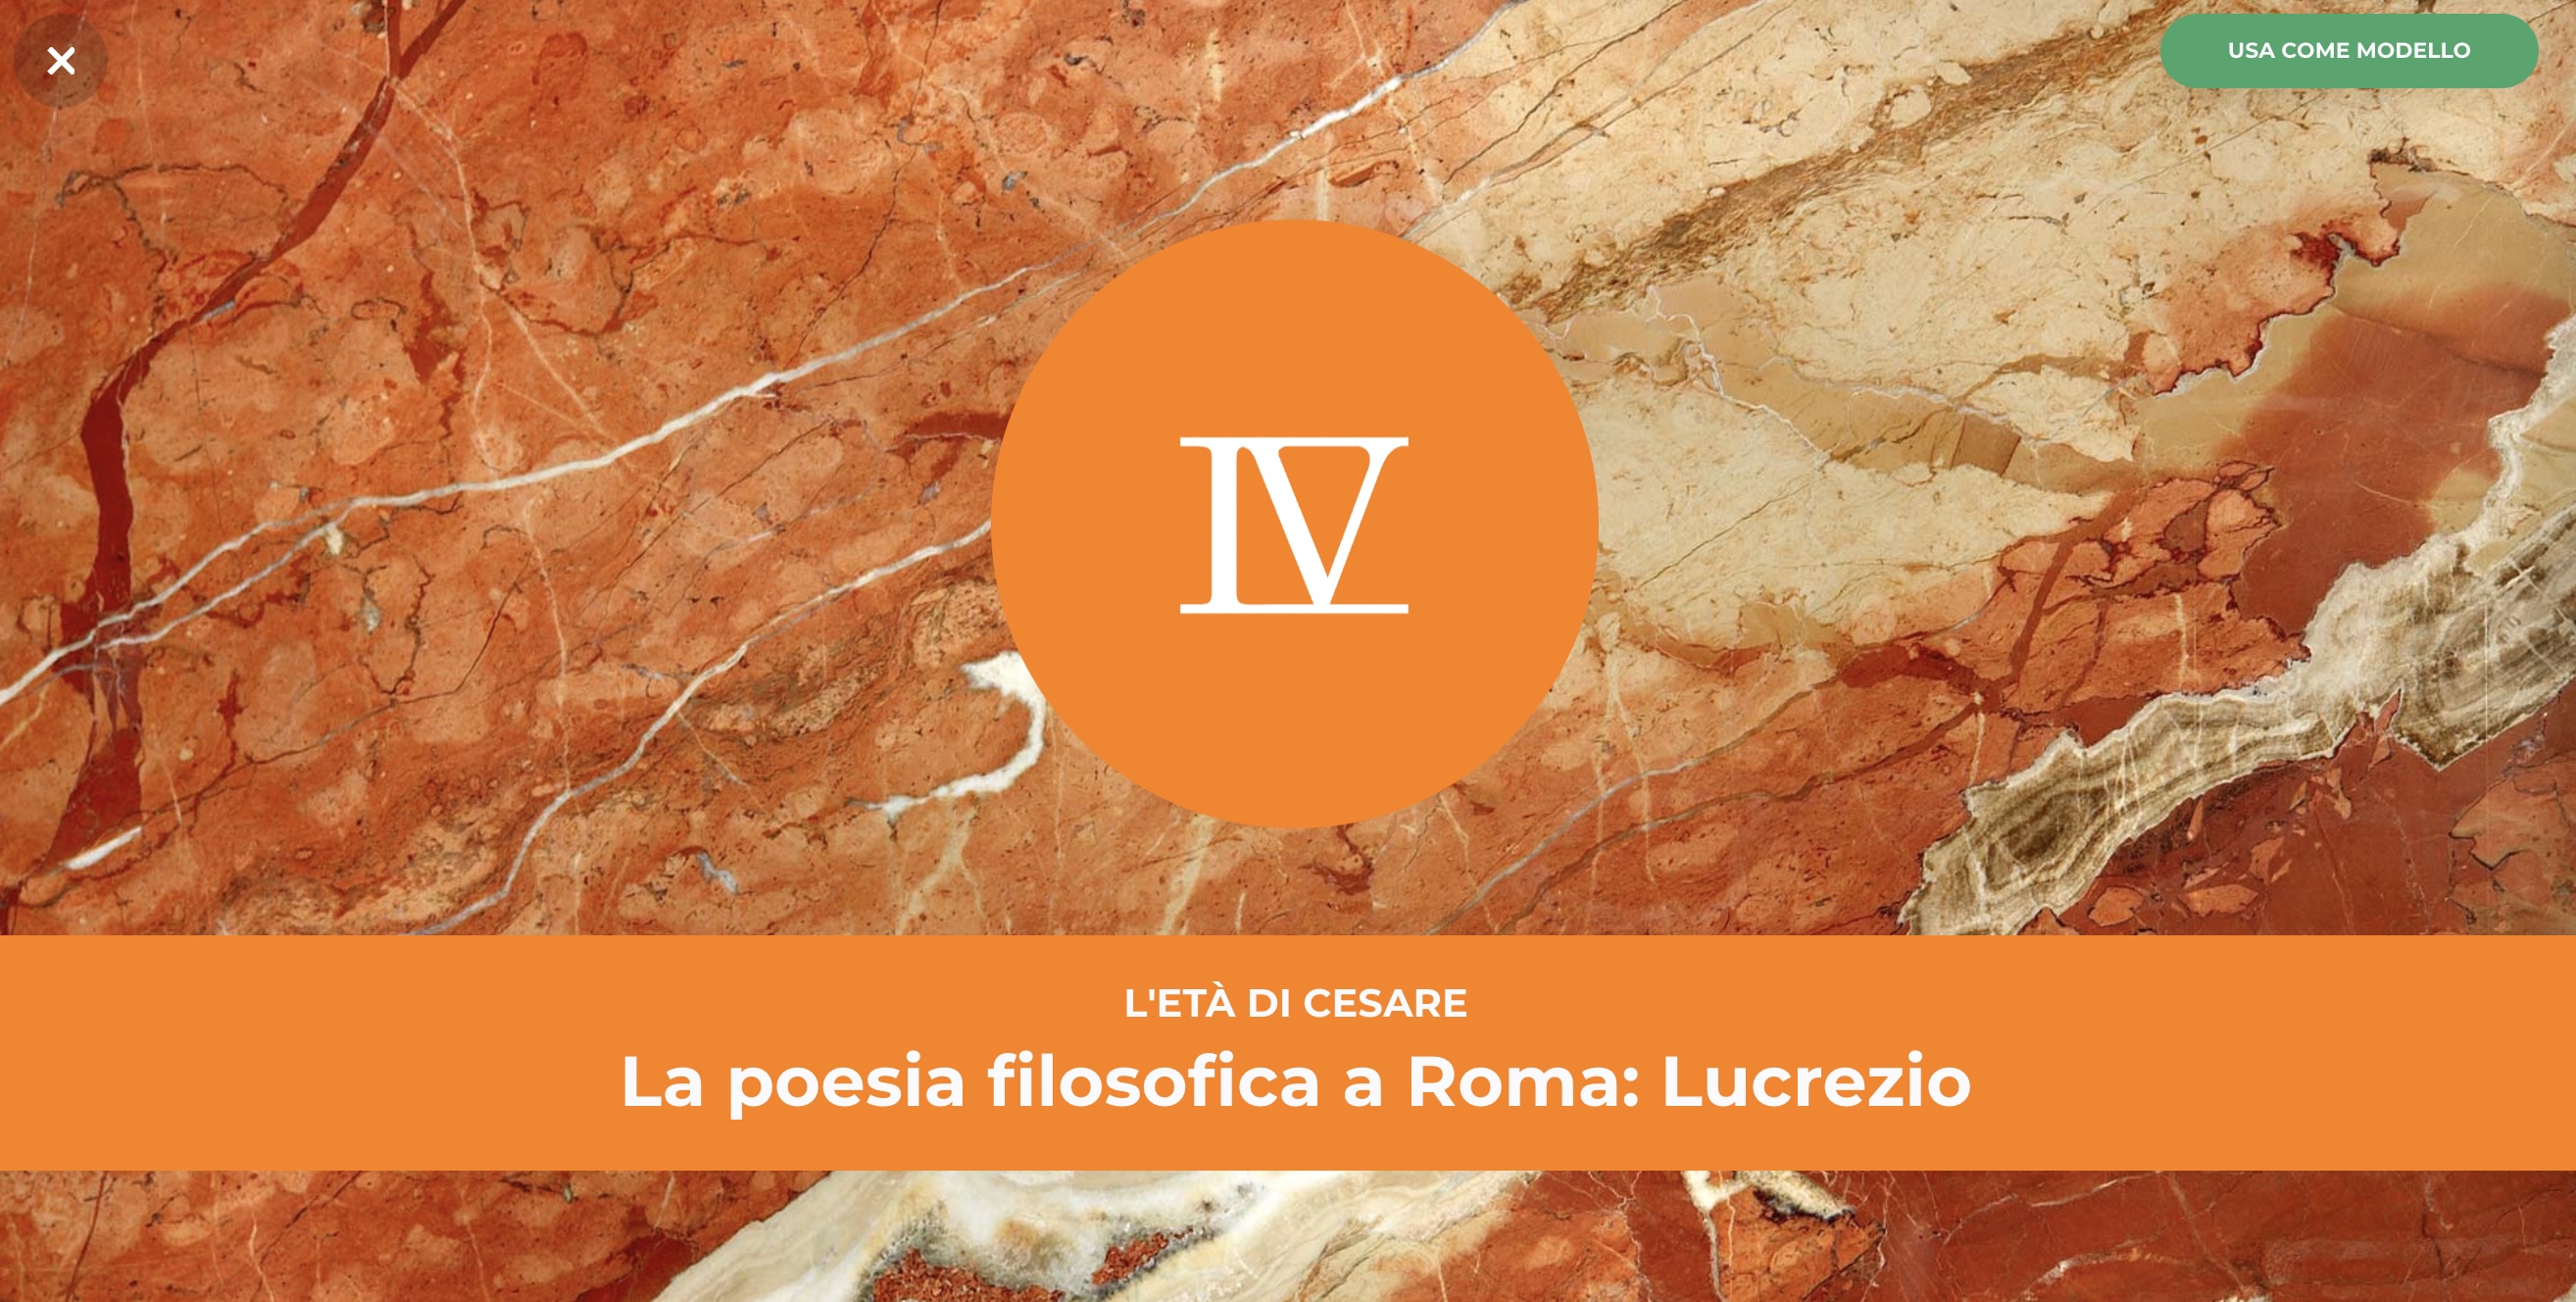 La poesia filosofica a Roma: Lucrezio